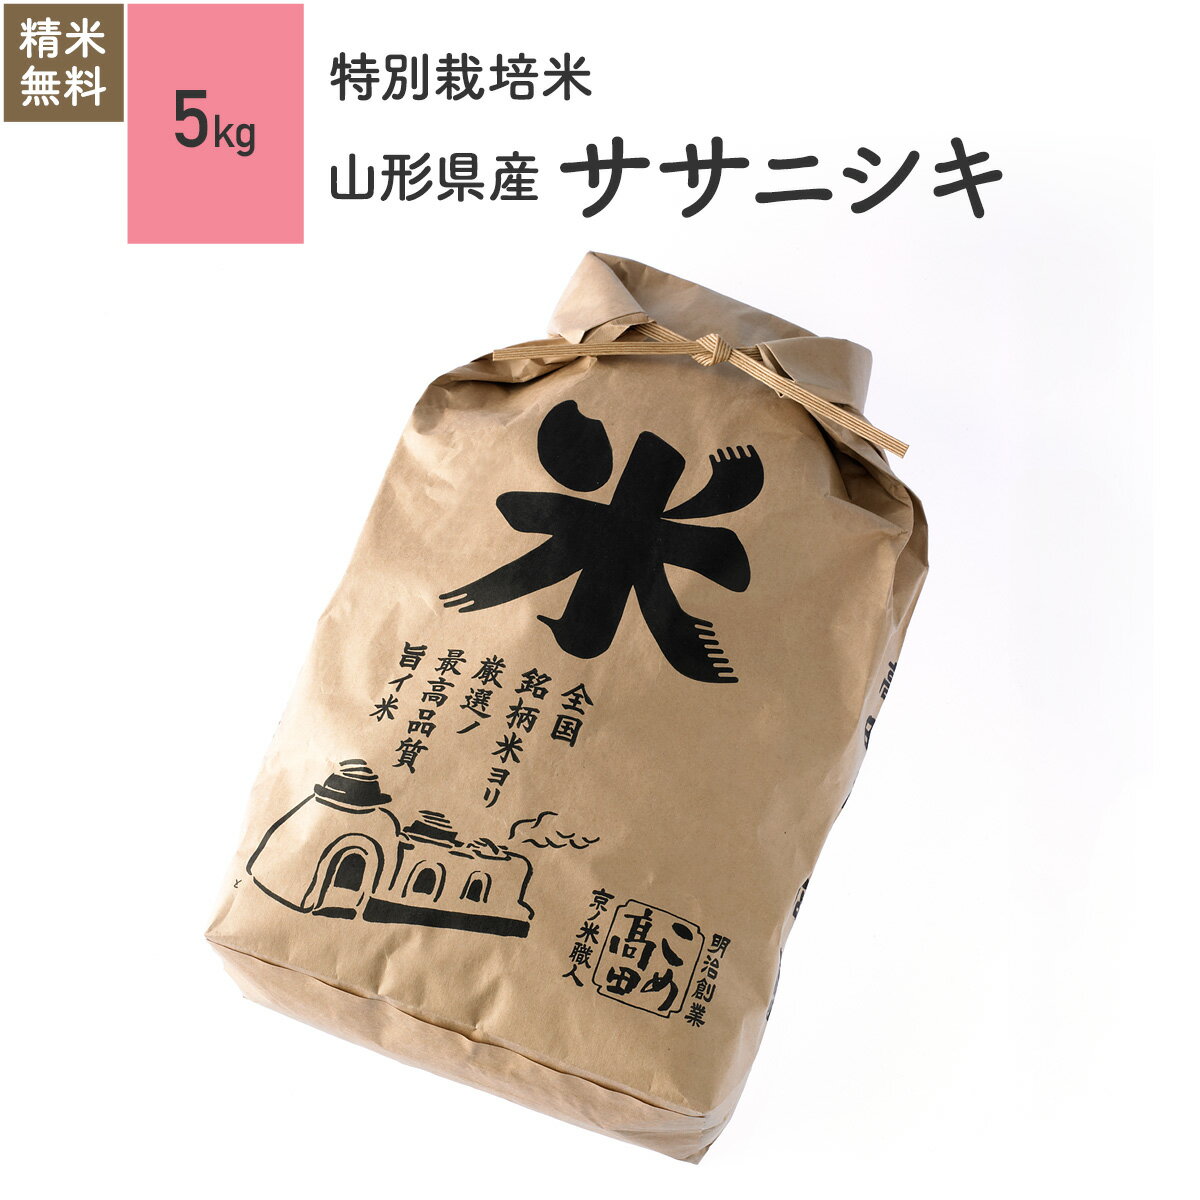 5kg ササニシキ 山形県産 特別栽培米